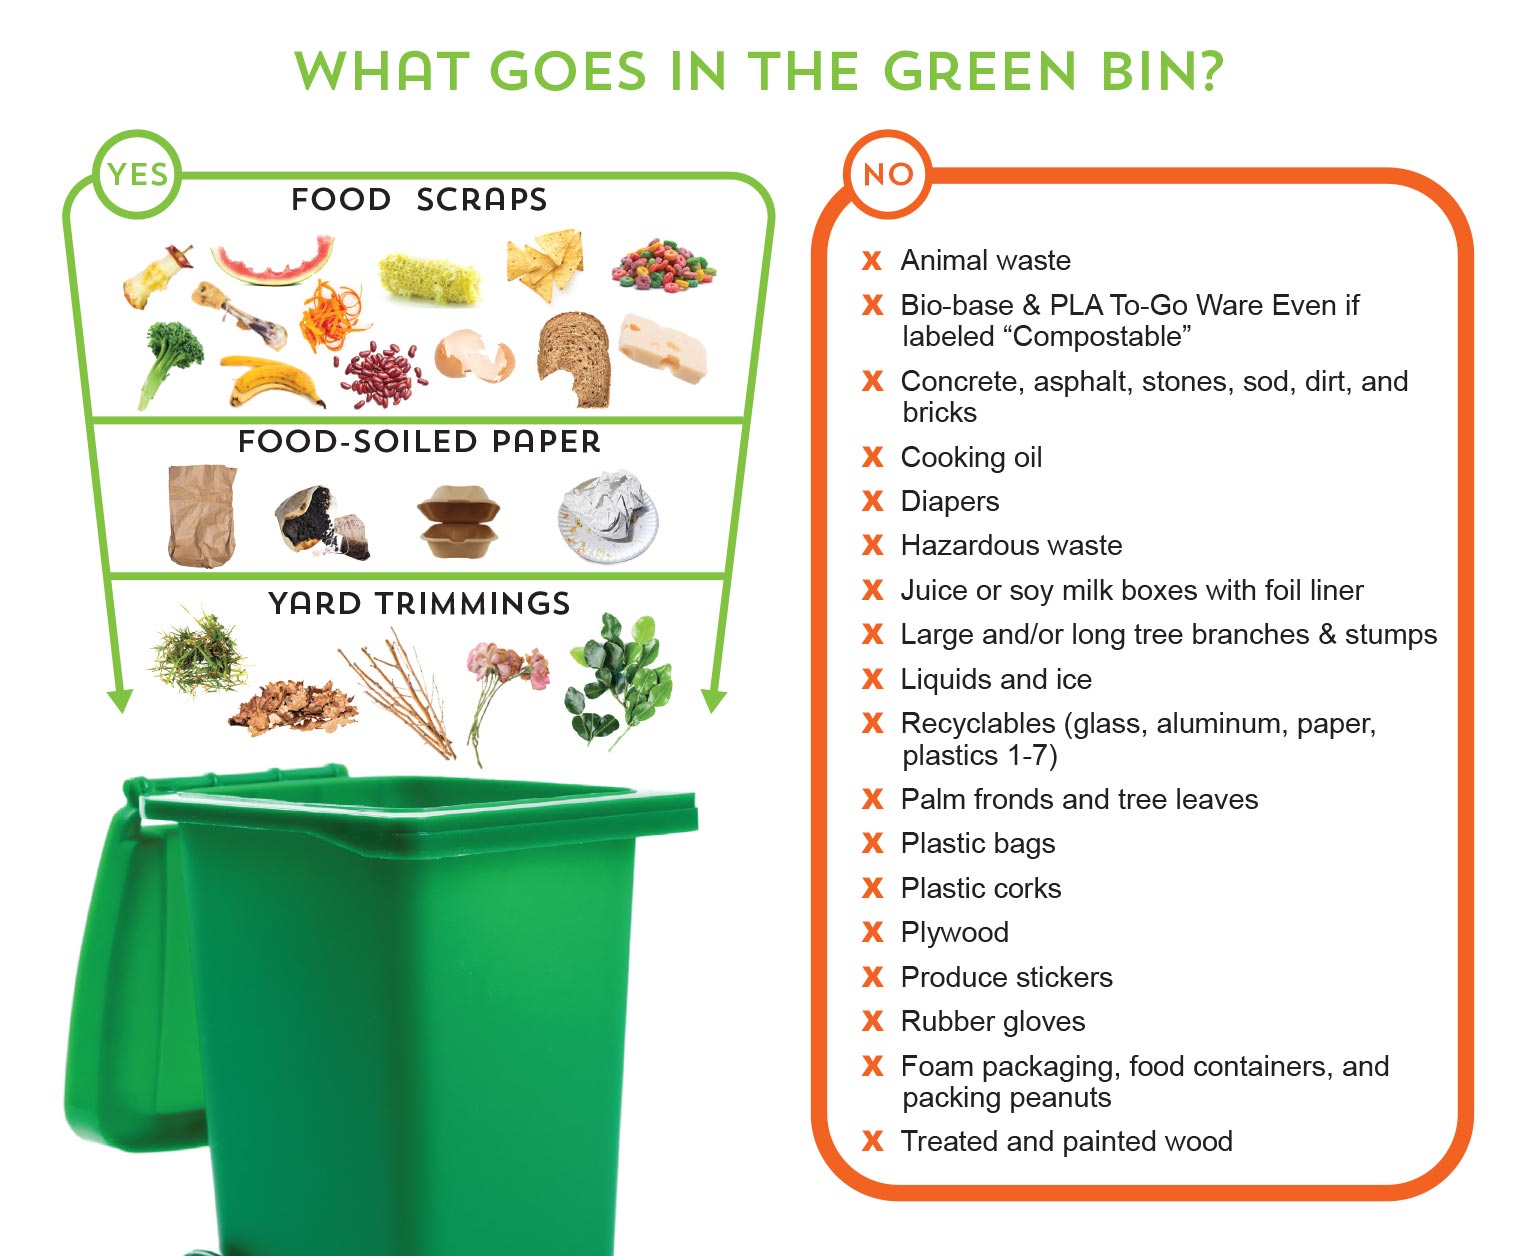 What goes in the green bin? Food Scraps, Food-soiled Paper, Yard Trimmings